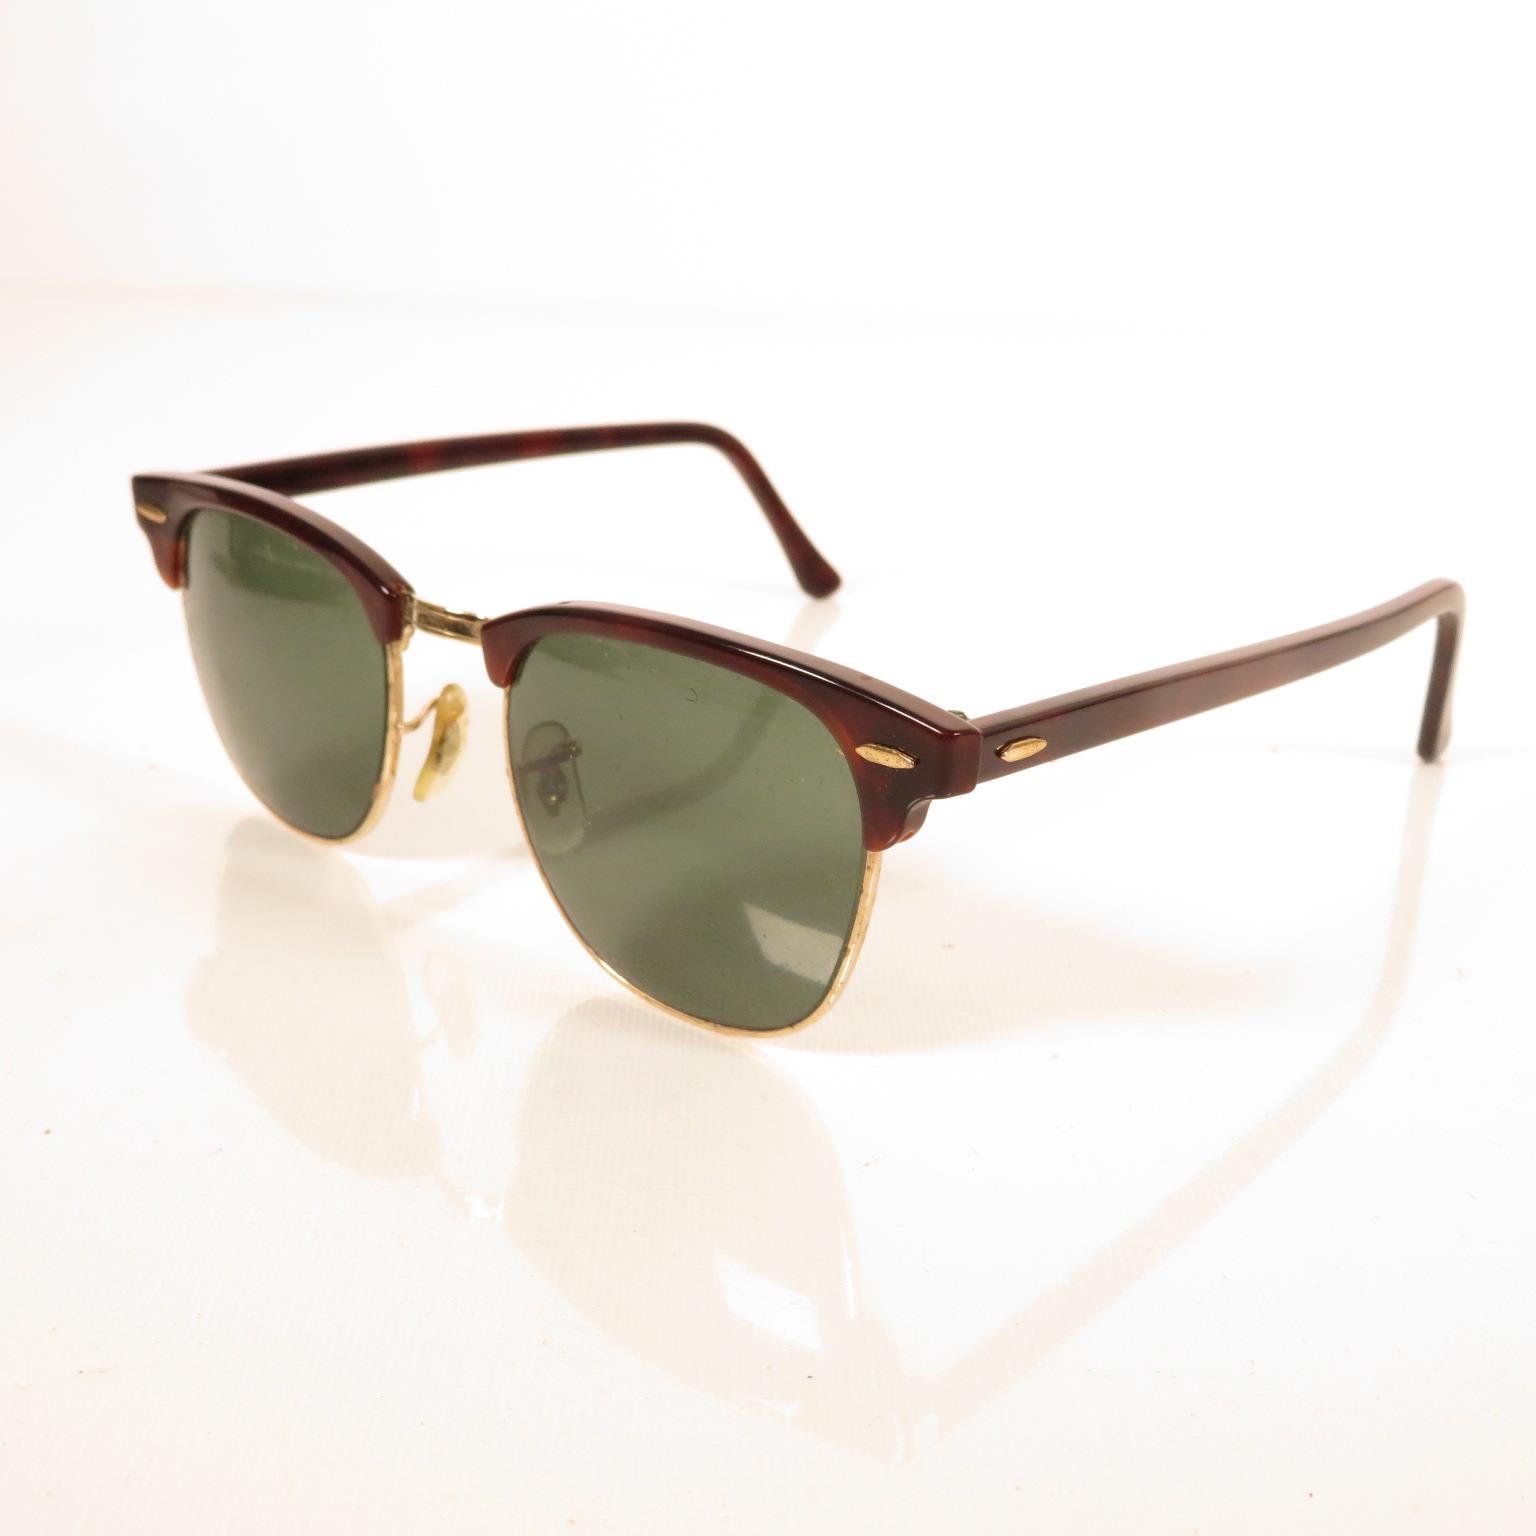 5x pairs Ray Ban sunglasses - - Image 12 of 23